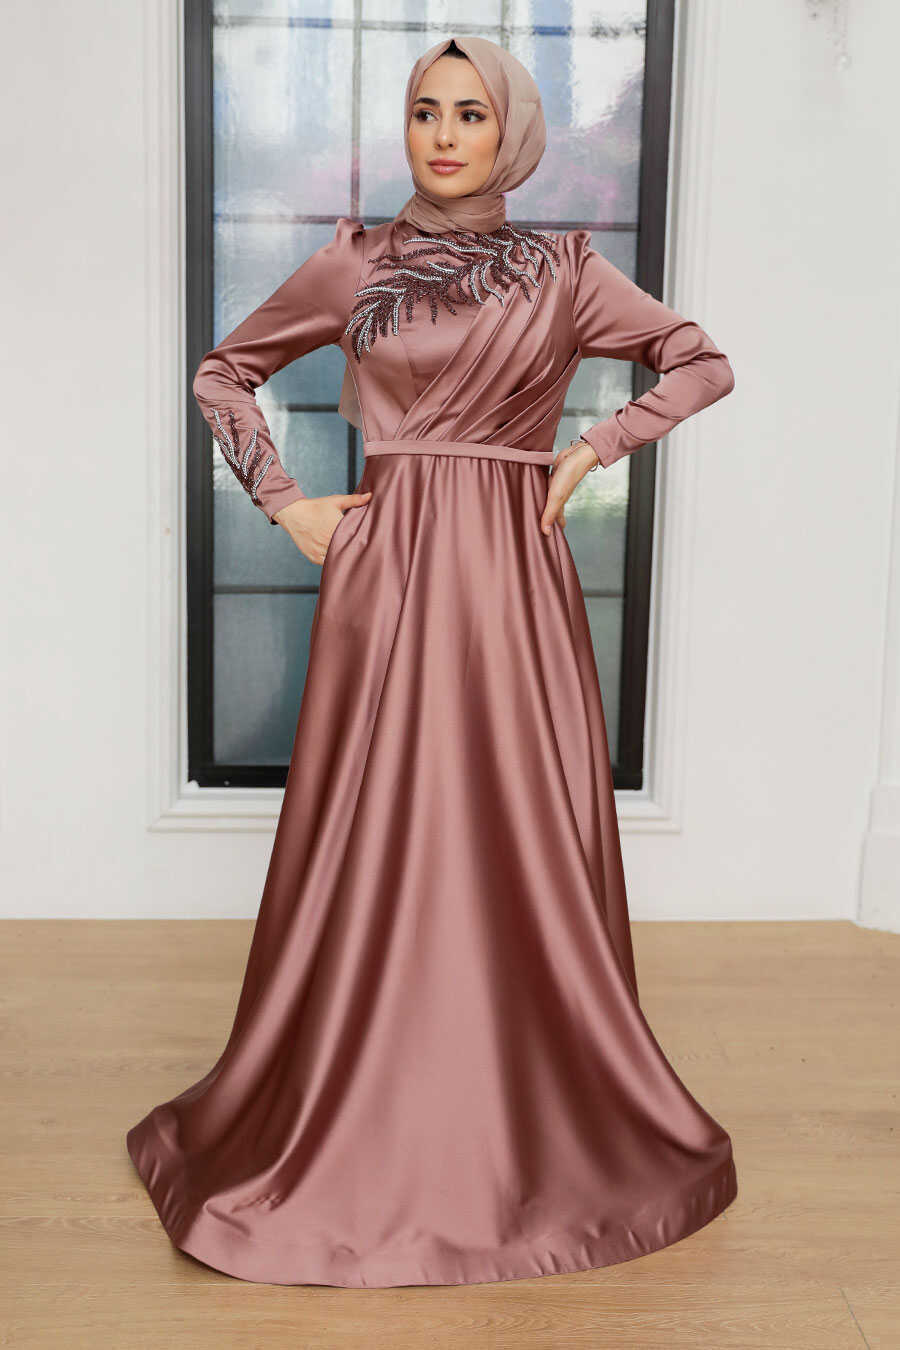 Beautiful islamic dress | Hijab fashion, Muslim fashion dress, Summer  fashion dresses casual